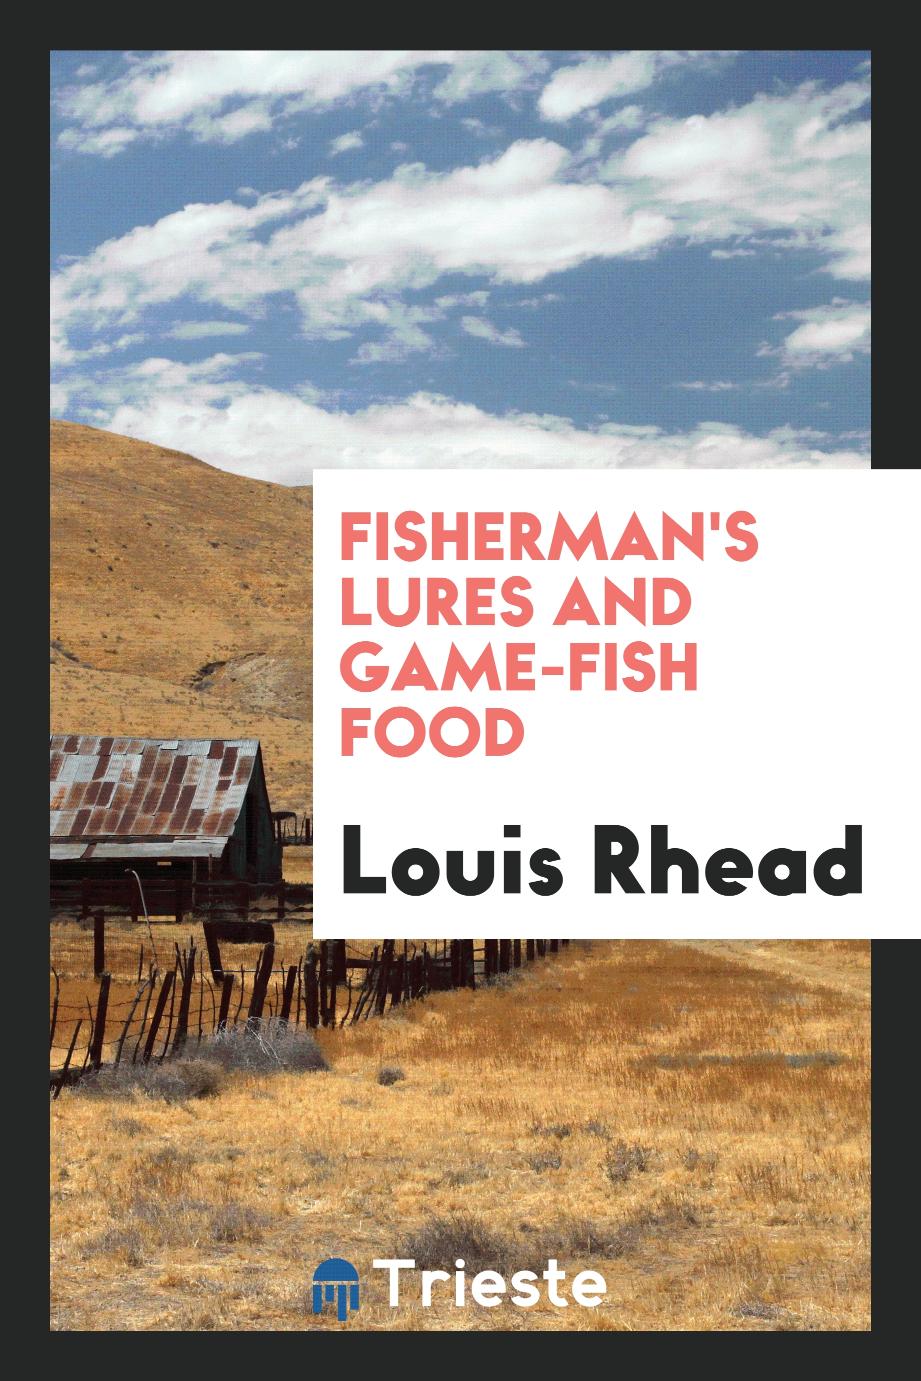 Fisherman's lures and game-fish food